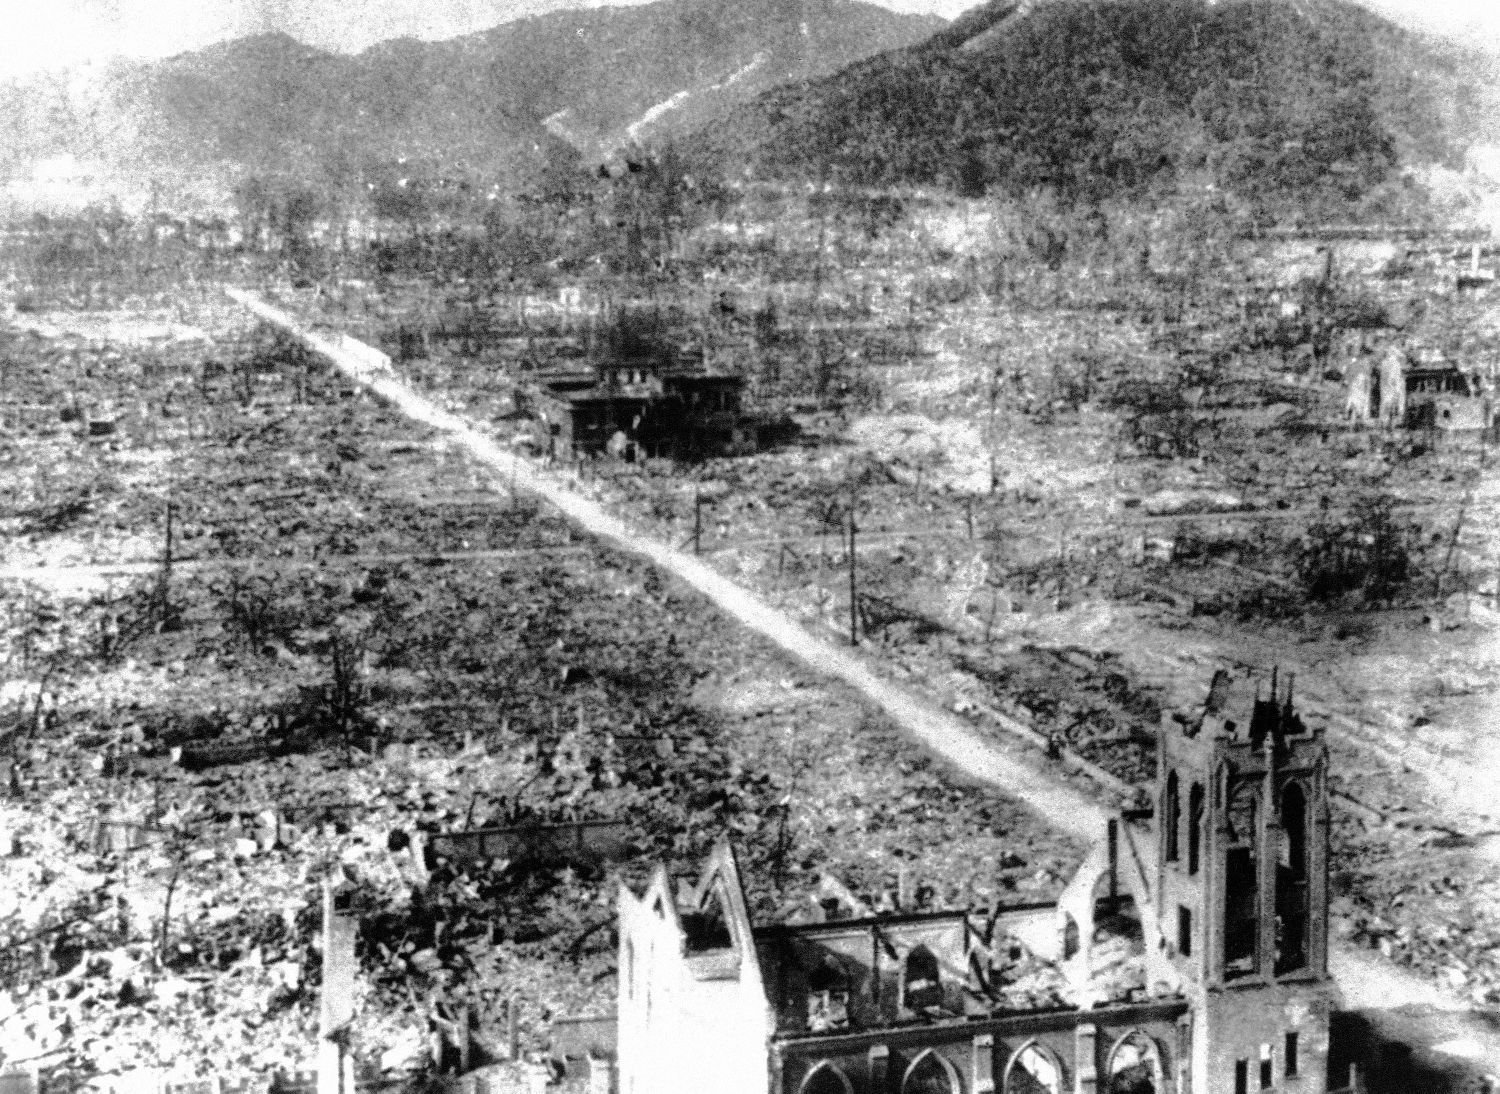 atomic bomb dropped on hiroshima